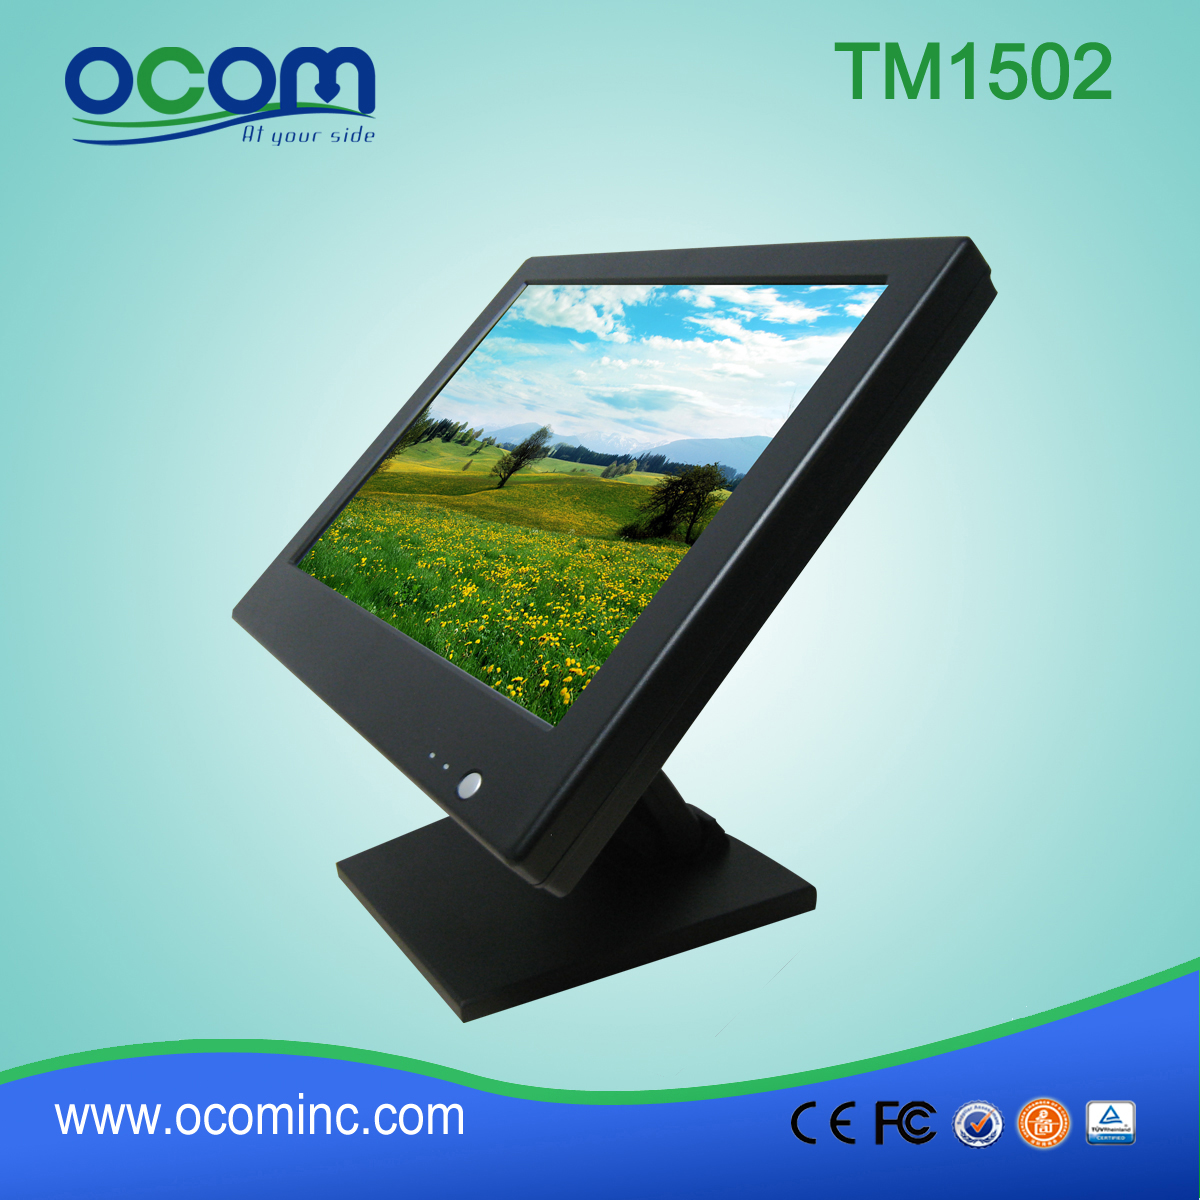 TM1502 Elastyczny 15-calowy monitor LCD Monitor LCD